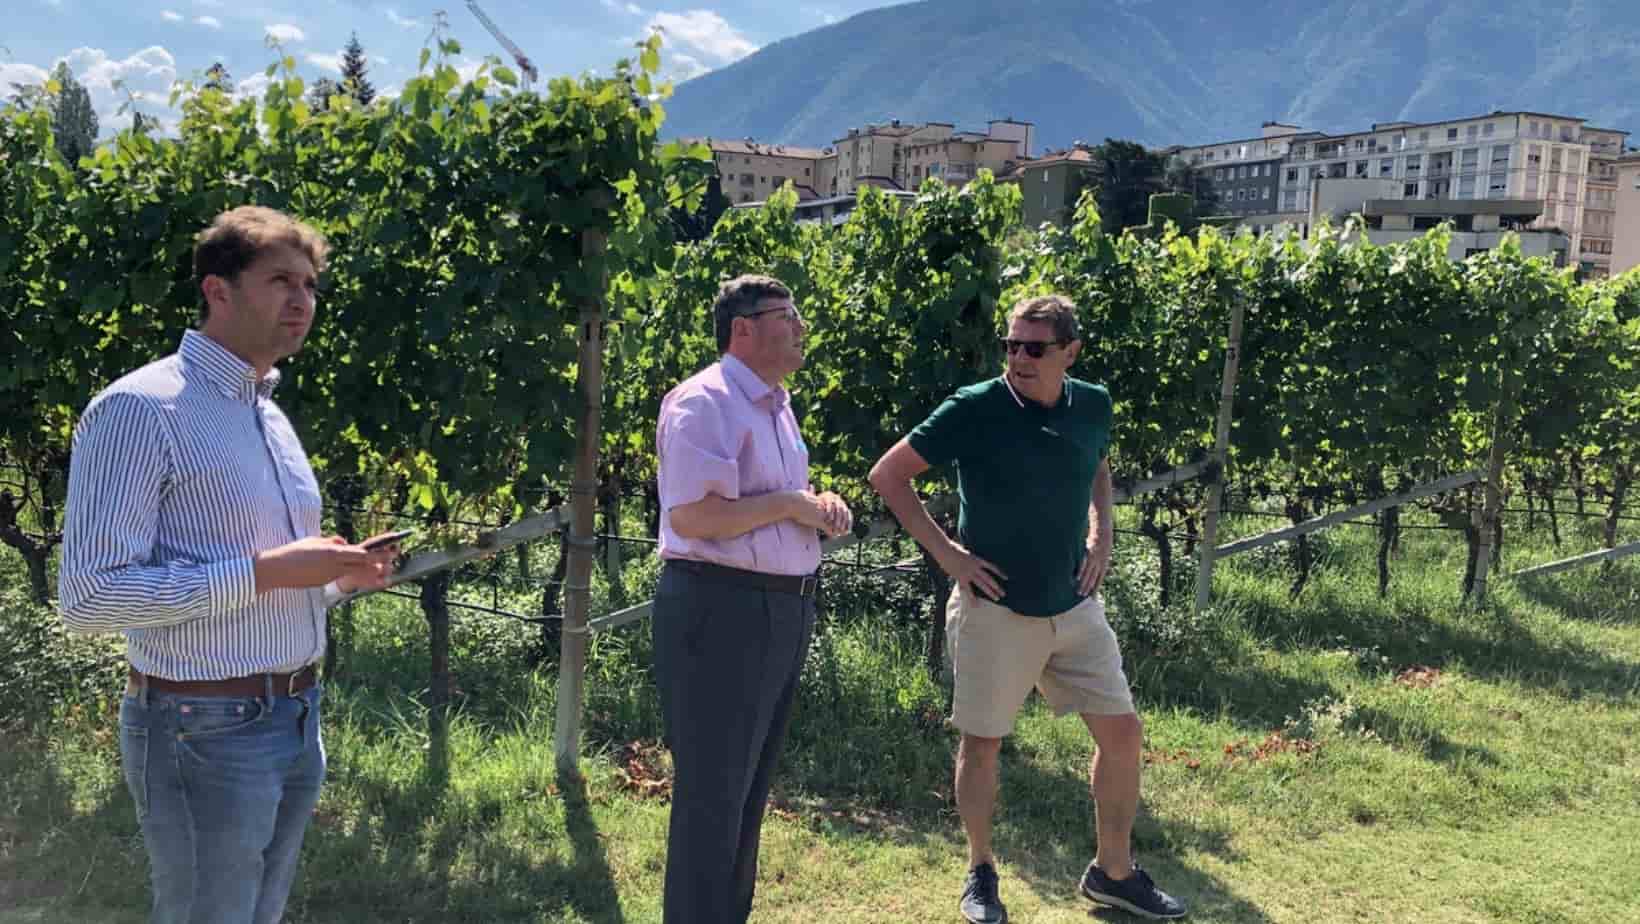 Our Belgian partner visited Muri Gries vineyards in July 2020.